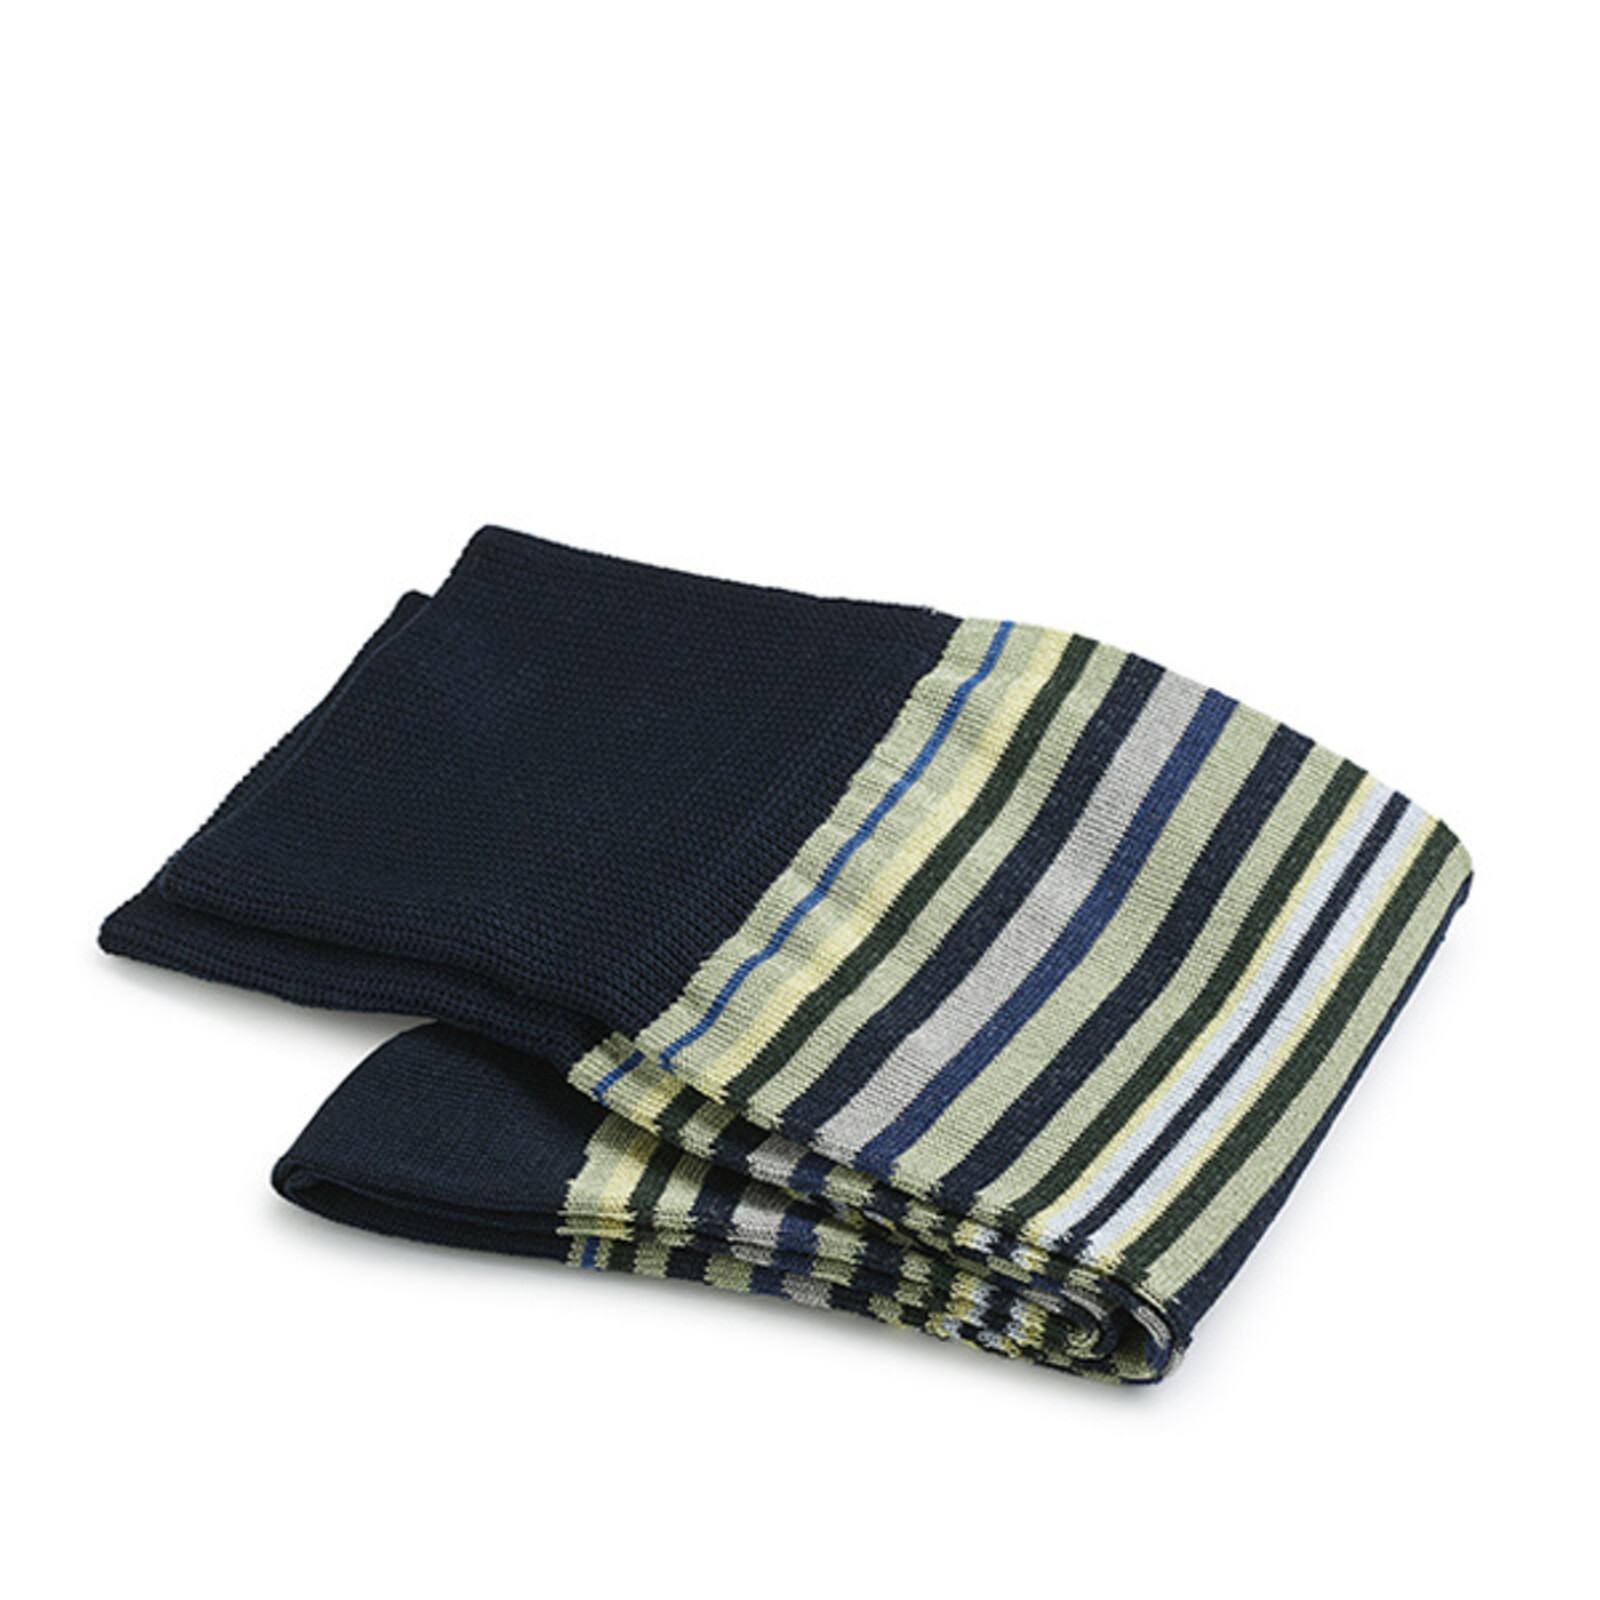 Carlo Lanza Blue stripe socks